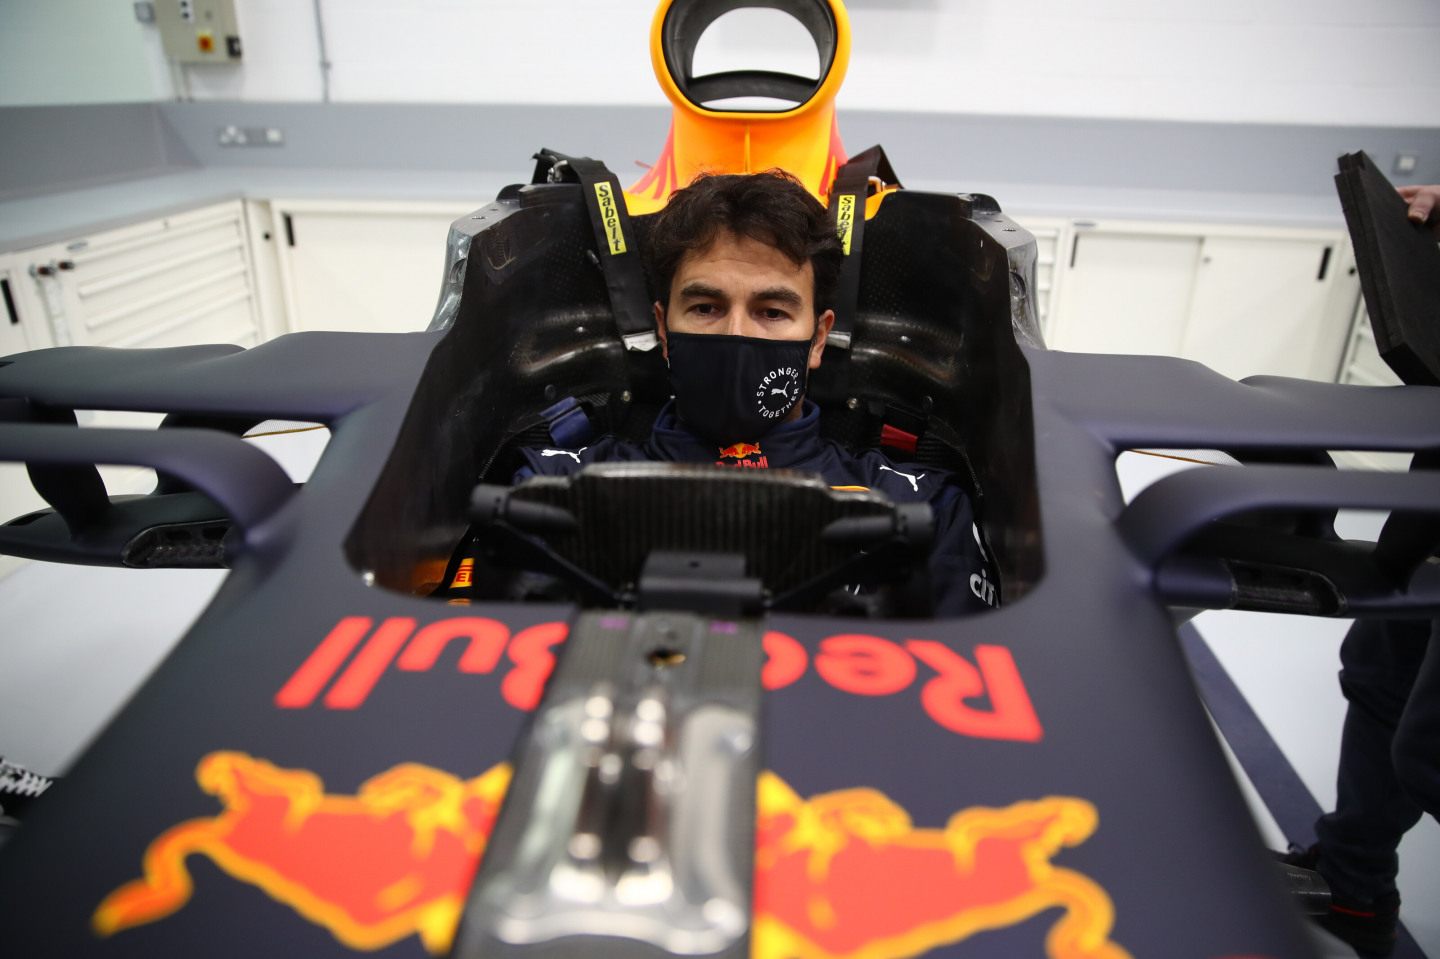 :Серхио Перес в кокпите машины Red Bull Racing © Getty Images/Red Bull Content Pool